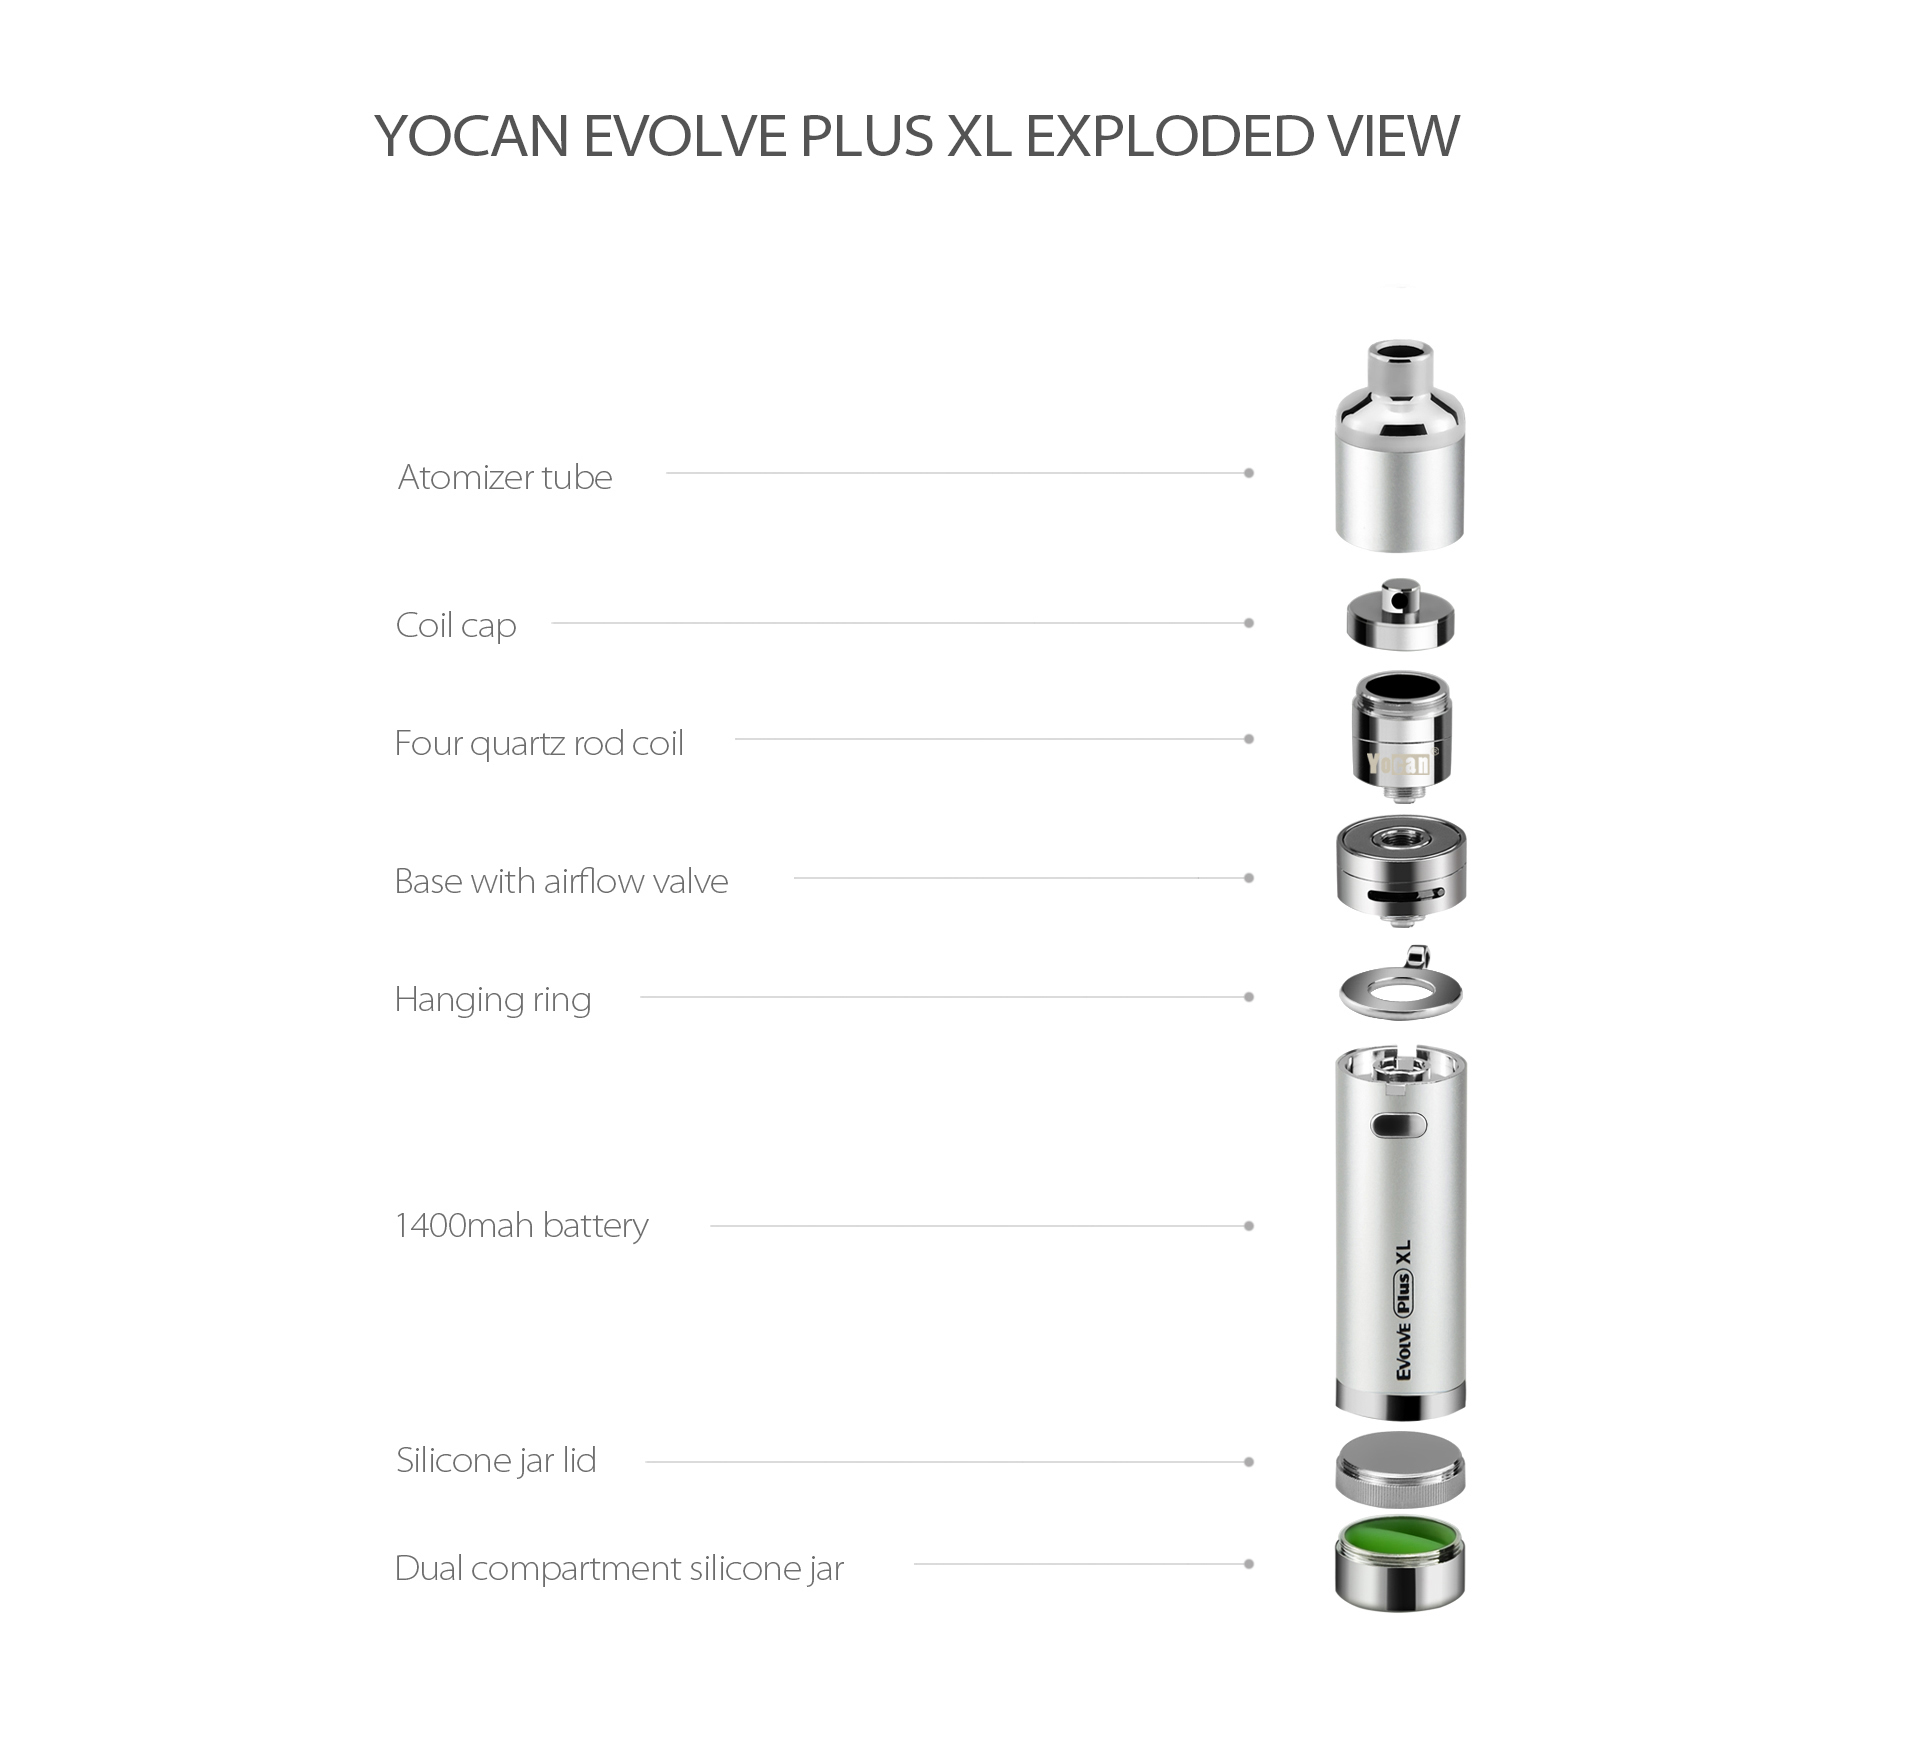 Yocan Evolve Plus XL Vaporizer 2020 version exploded view.